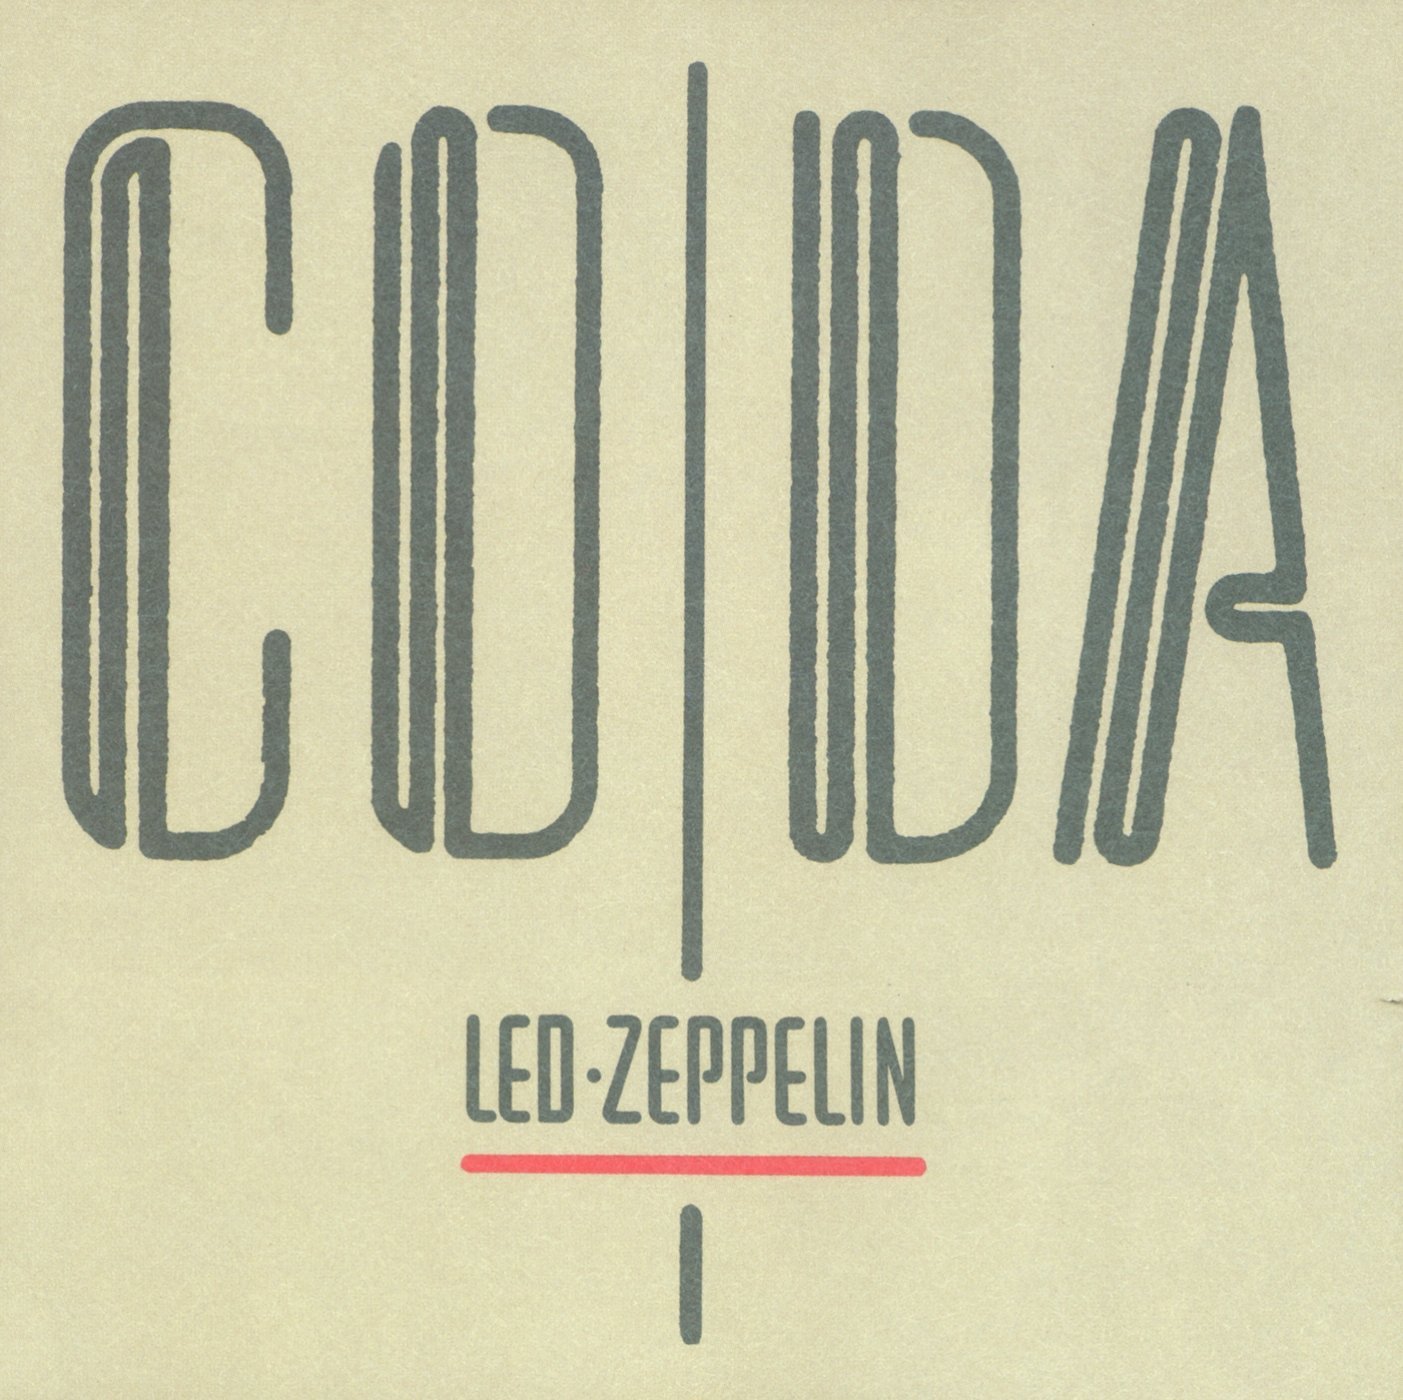 Led Zeppelin "CODA" Vinyl